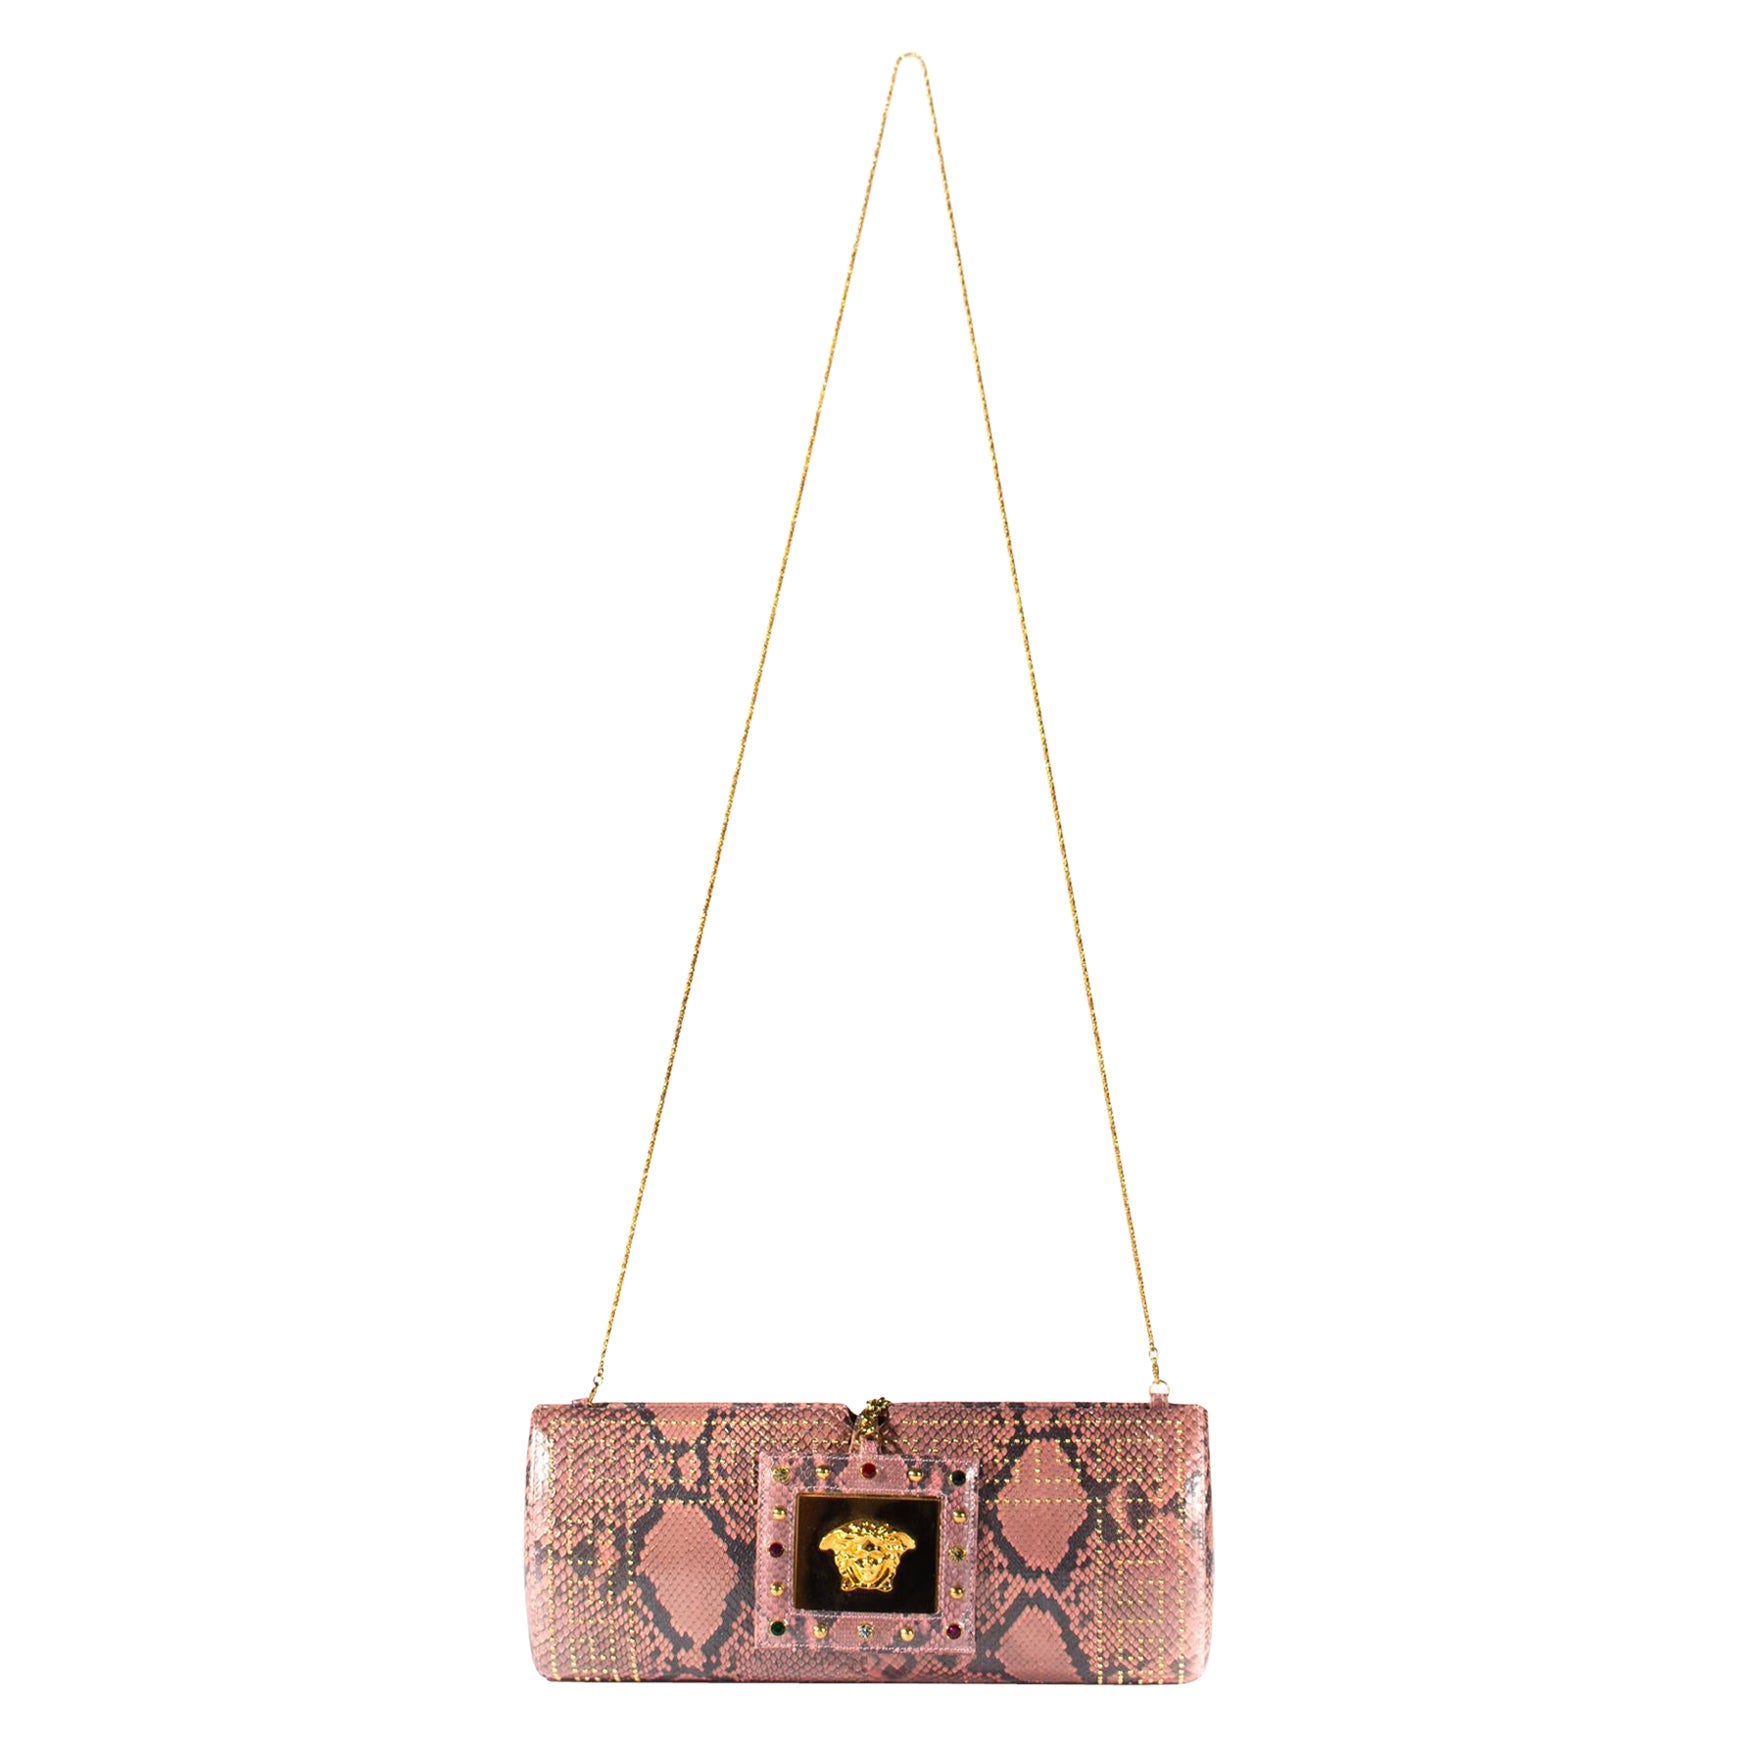 S/S 2000 Gianni Versace Python Pink Convertible Evening Bag & Clutch Donatella